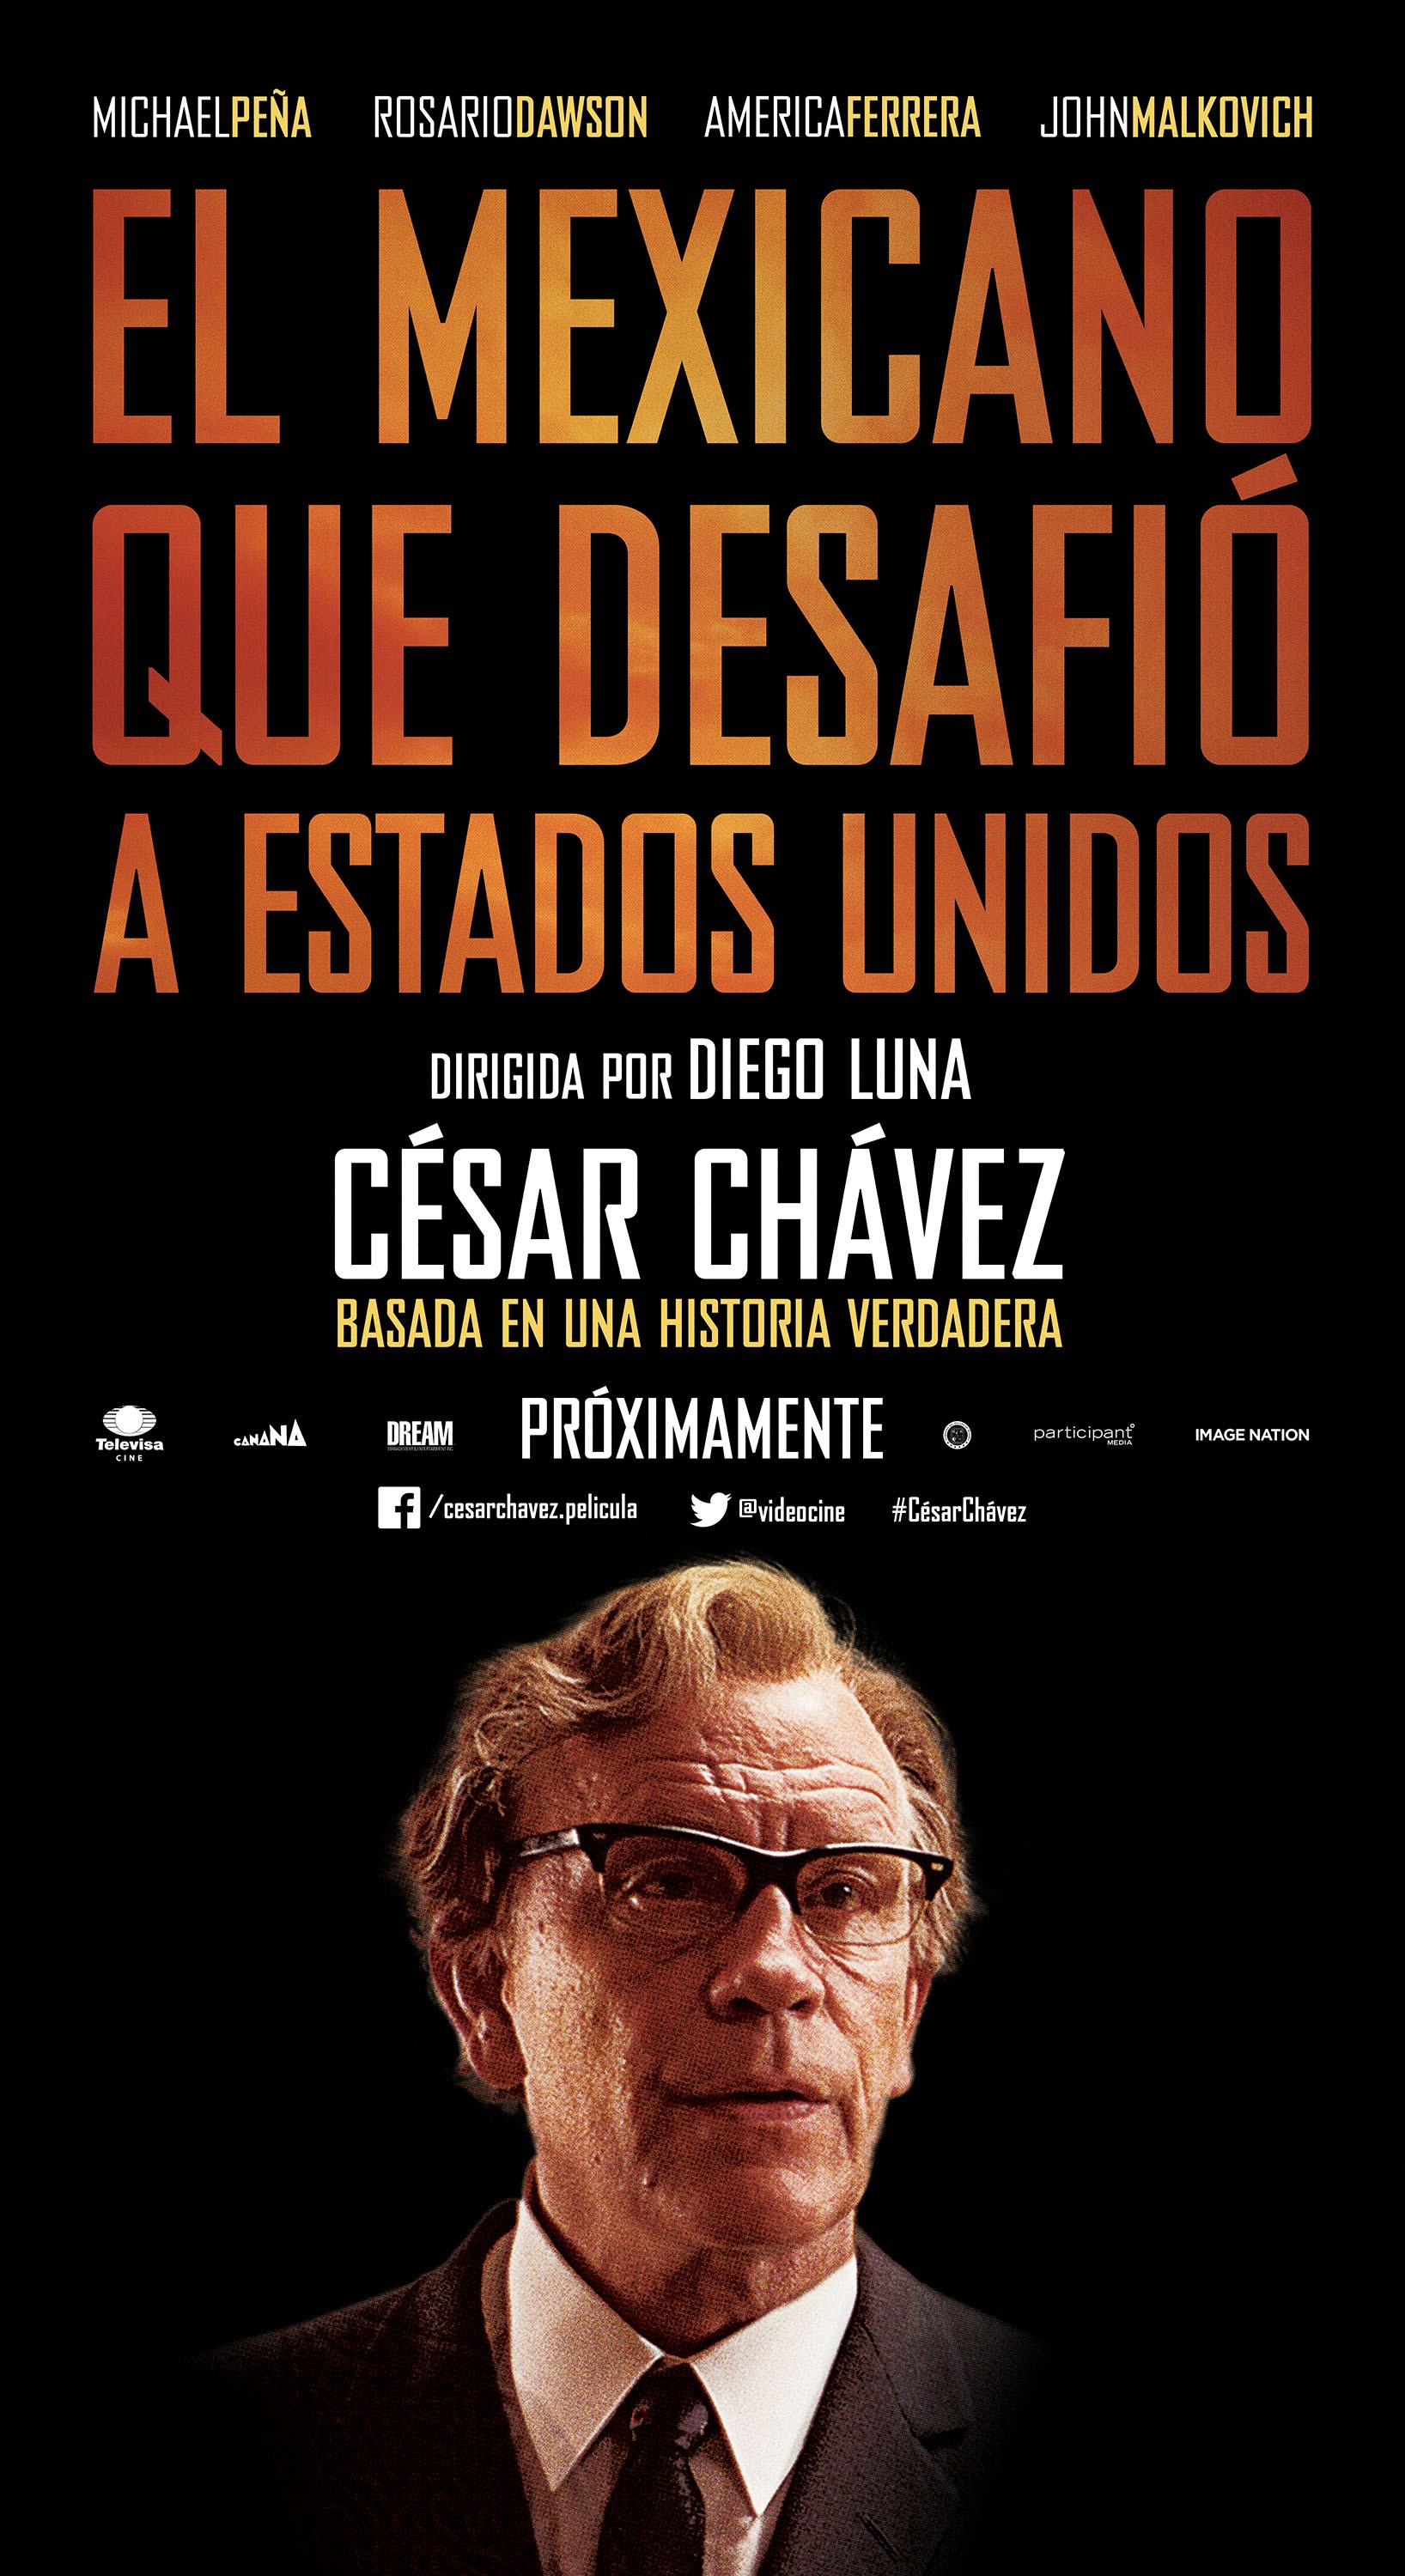 Julio César Chávez Jr